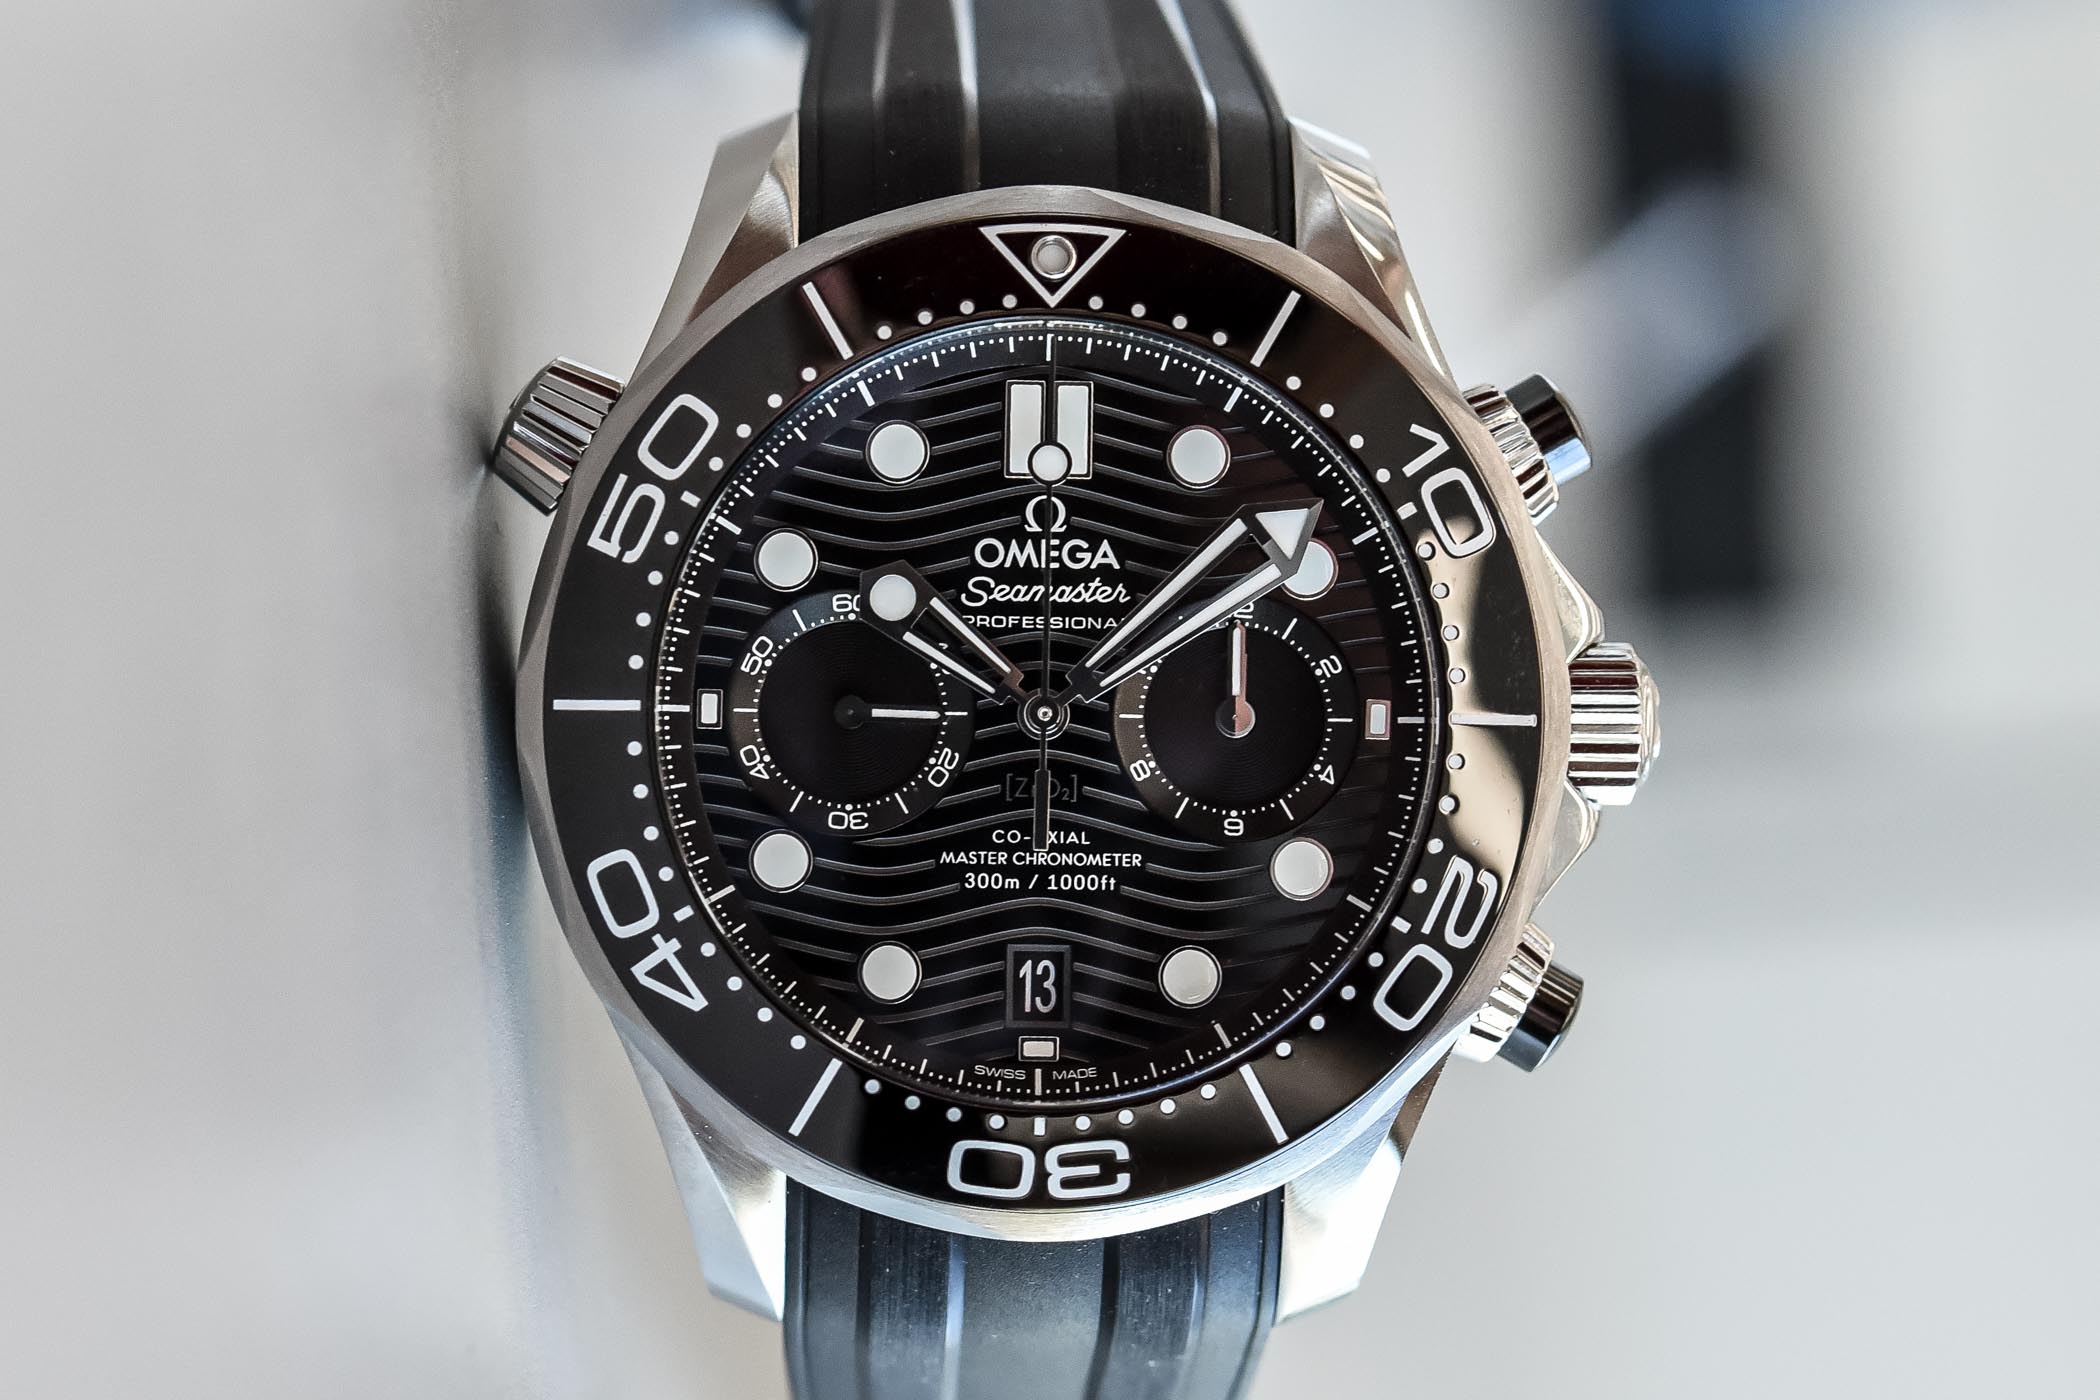 Omega Seamaster Diver 300M Chronograph Master Chronometer - 210.32.44.51.01.001